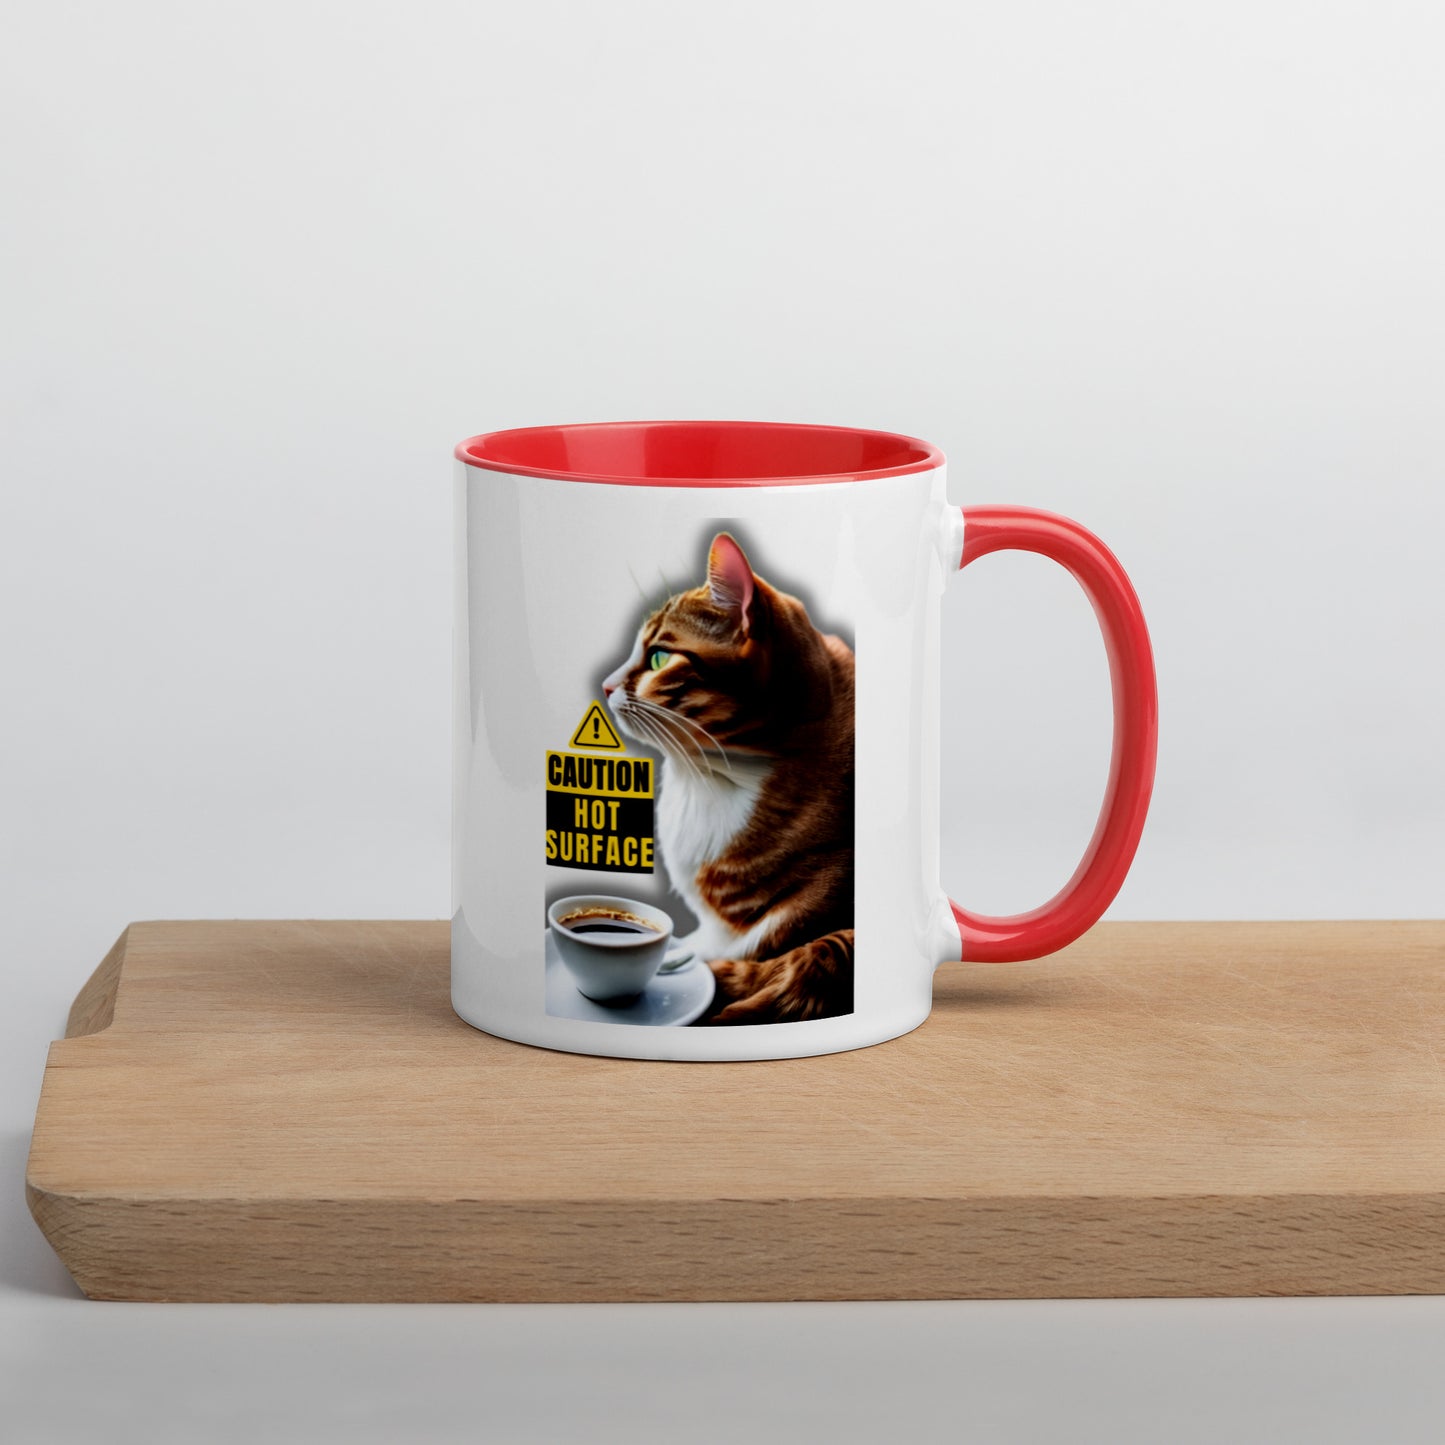 Colorful "Cautious Kitty" Mug